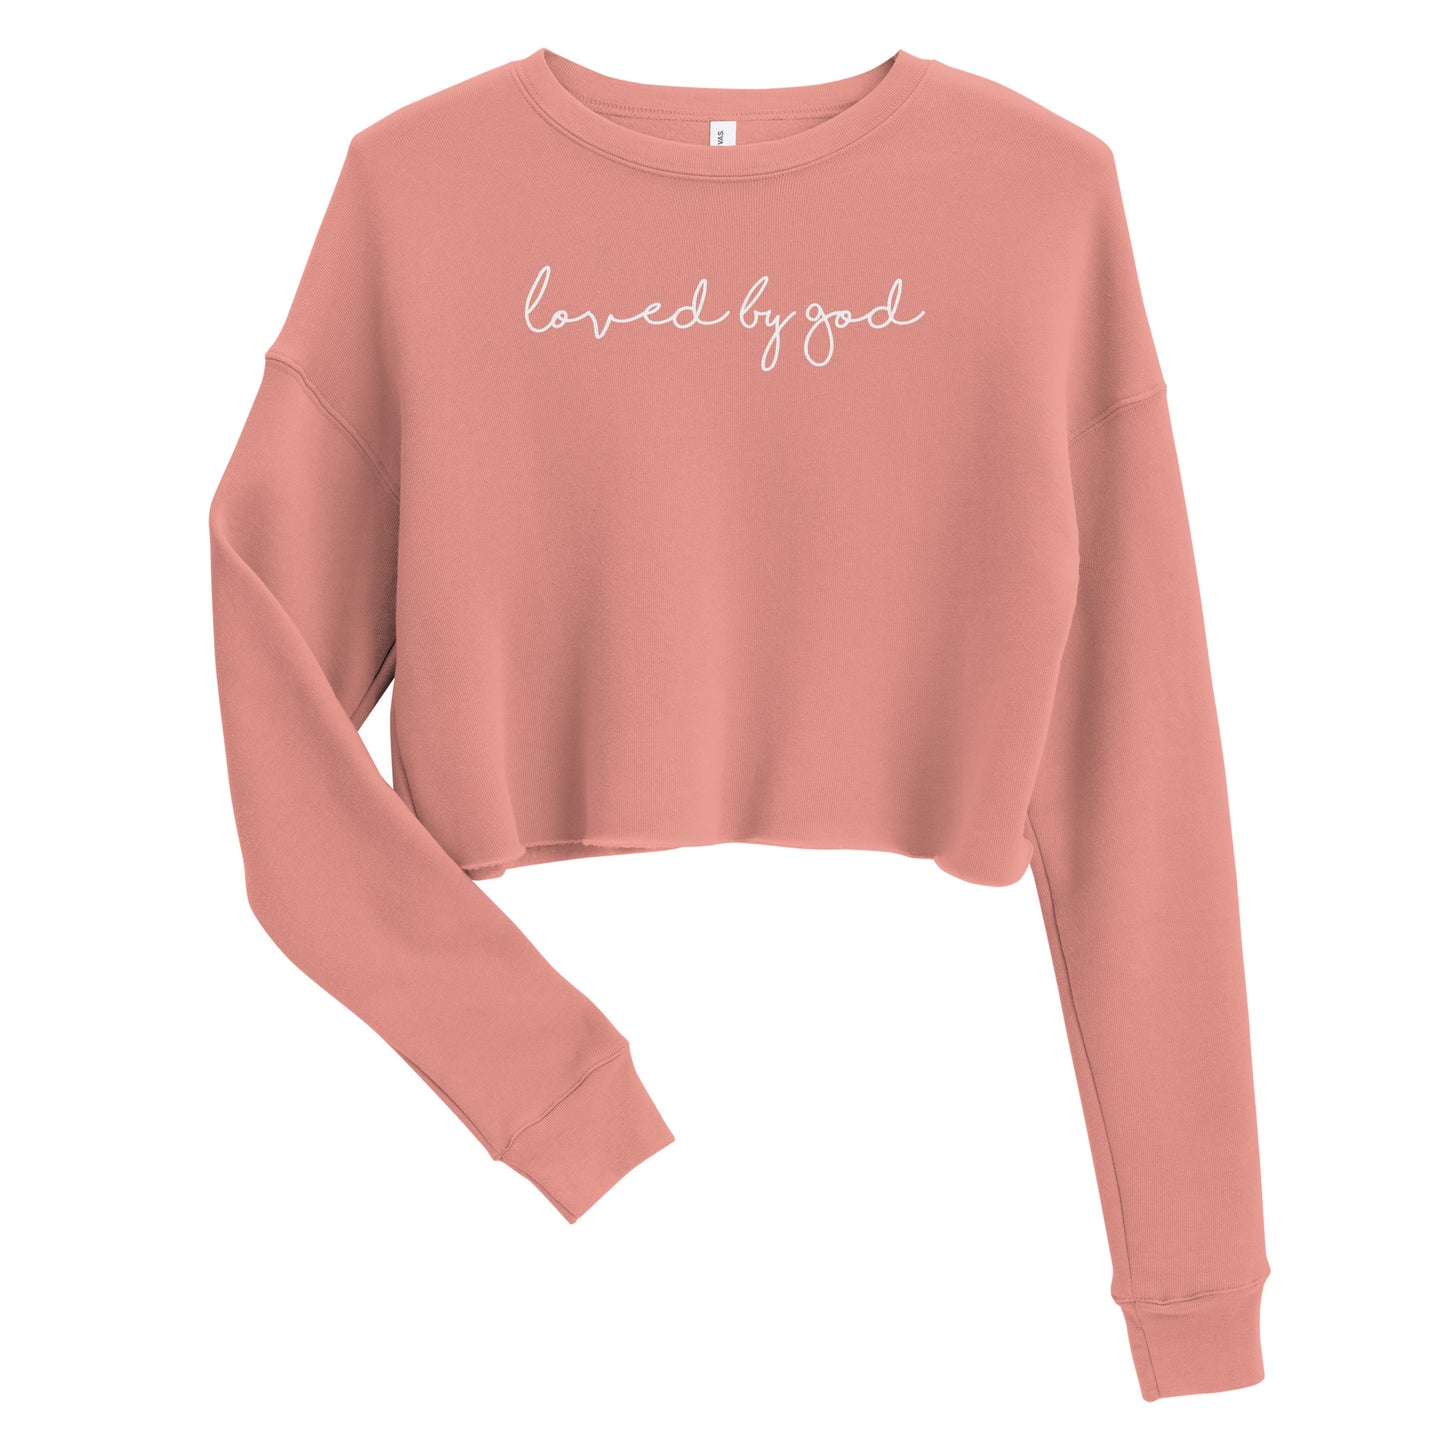 Christian Sweatshirt | Loved By God | Christian Apparel for Women | Crop Sweatshirt